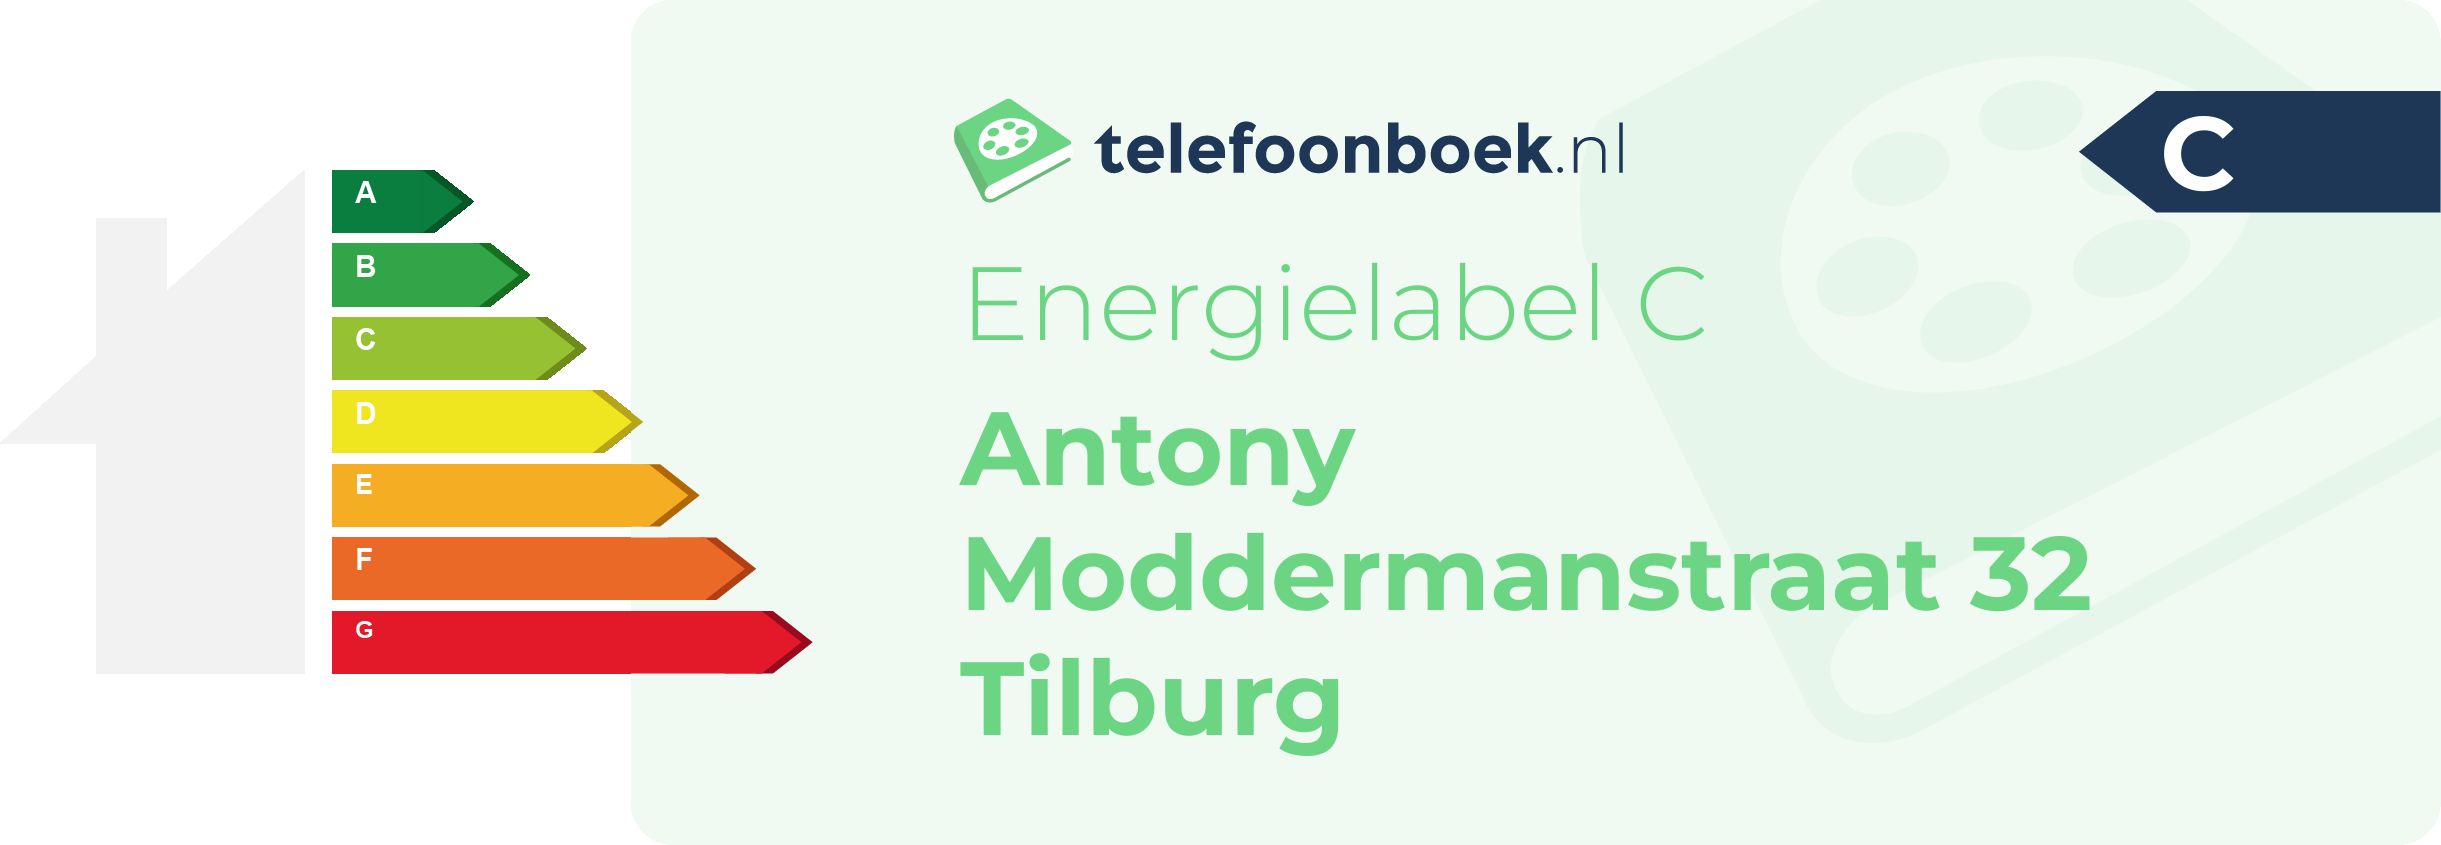 Energielabel Antony Moddermanstraat 32 Tilburg